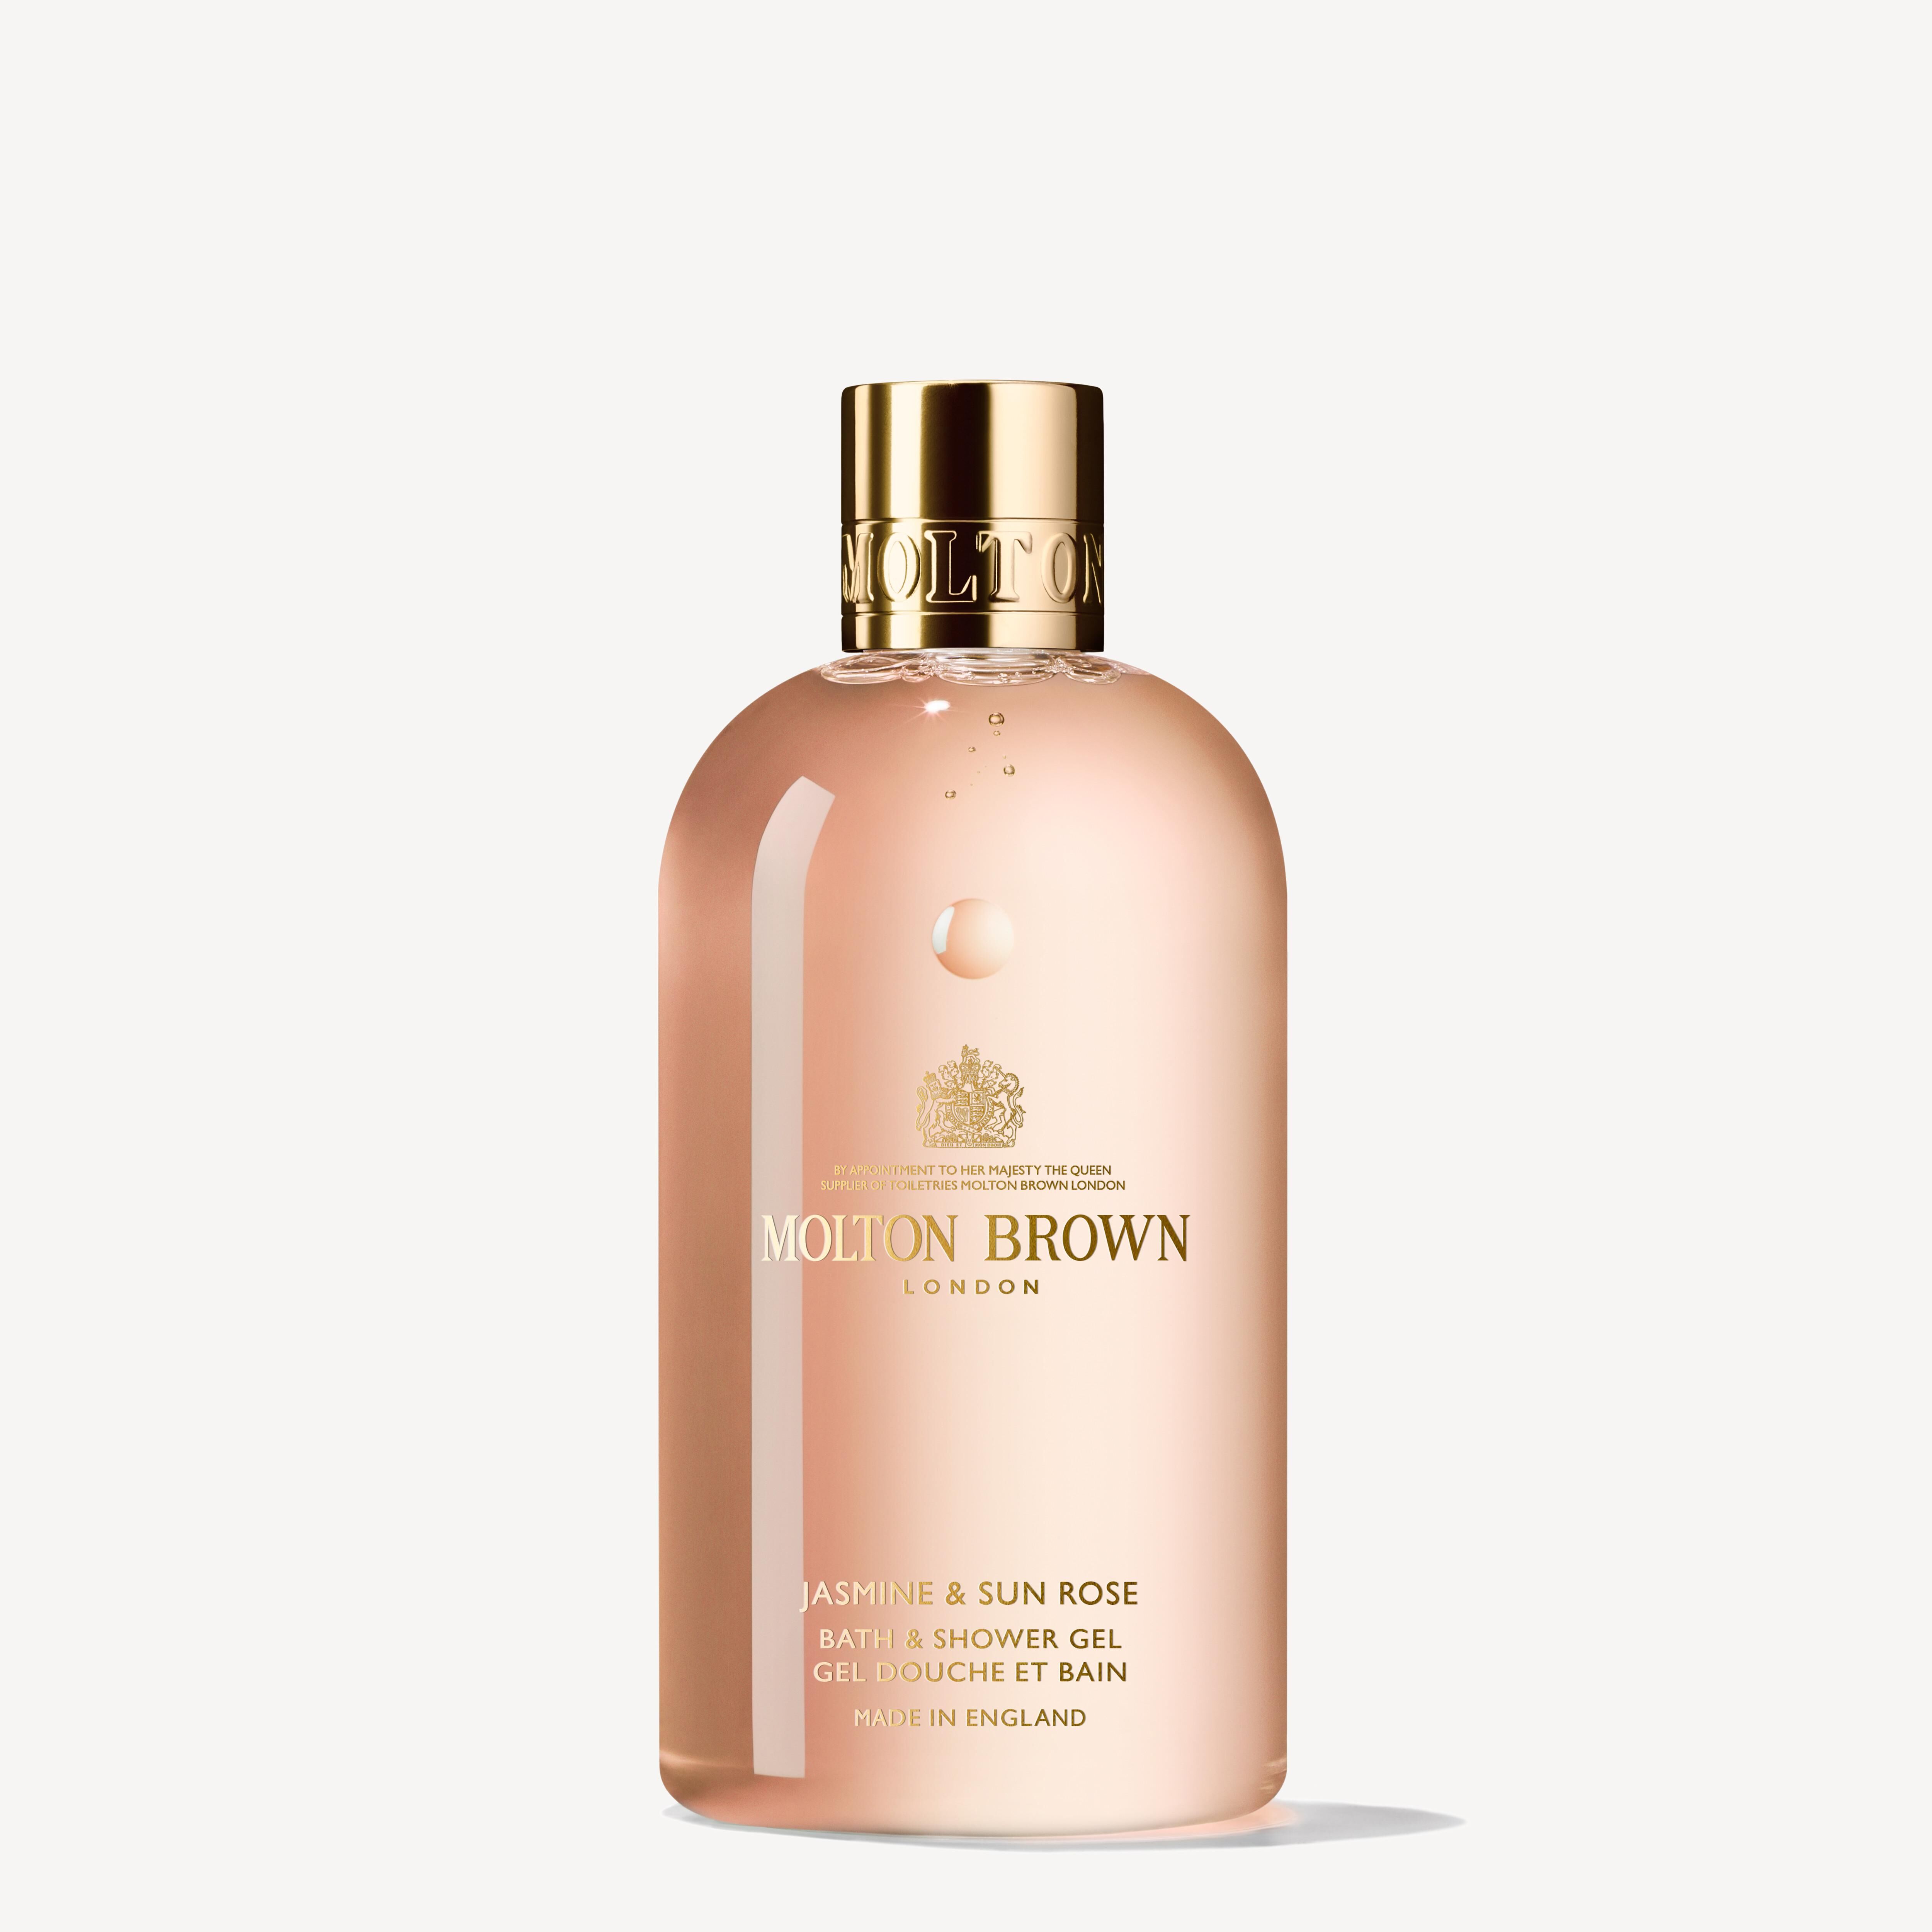 Molton Brown Jasmine & Sun Rose Bath & Shower Gel 10fl oz